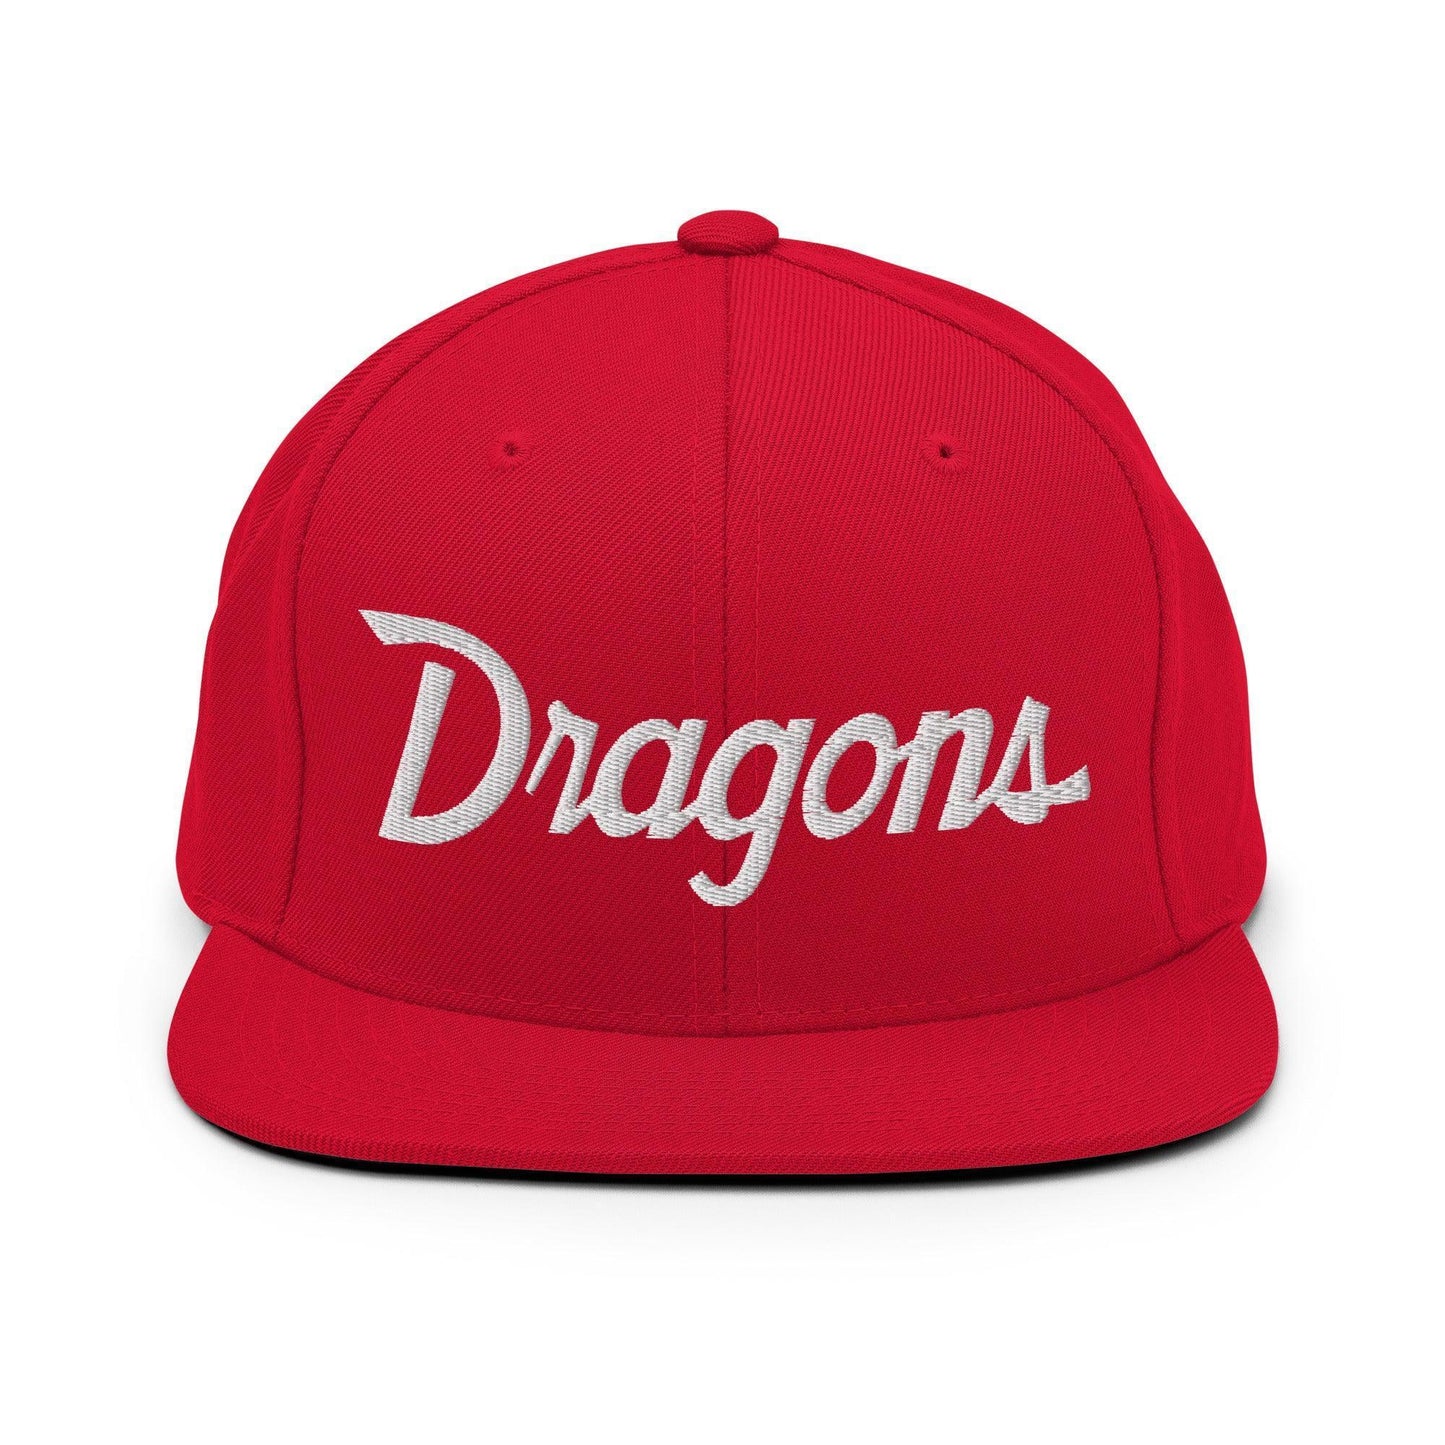 Dragons School Mascot Snapback Hat Red